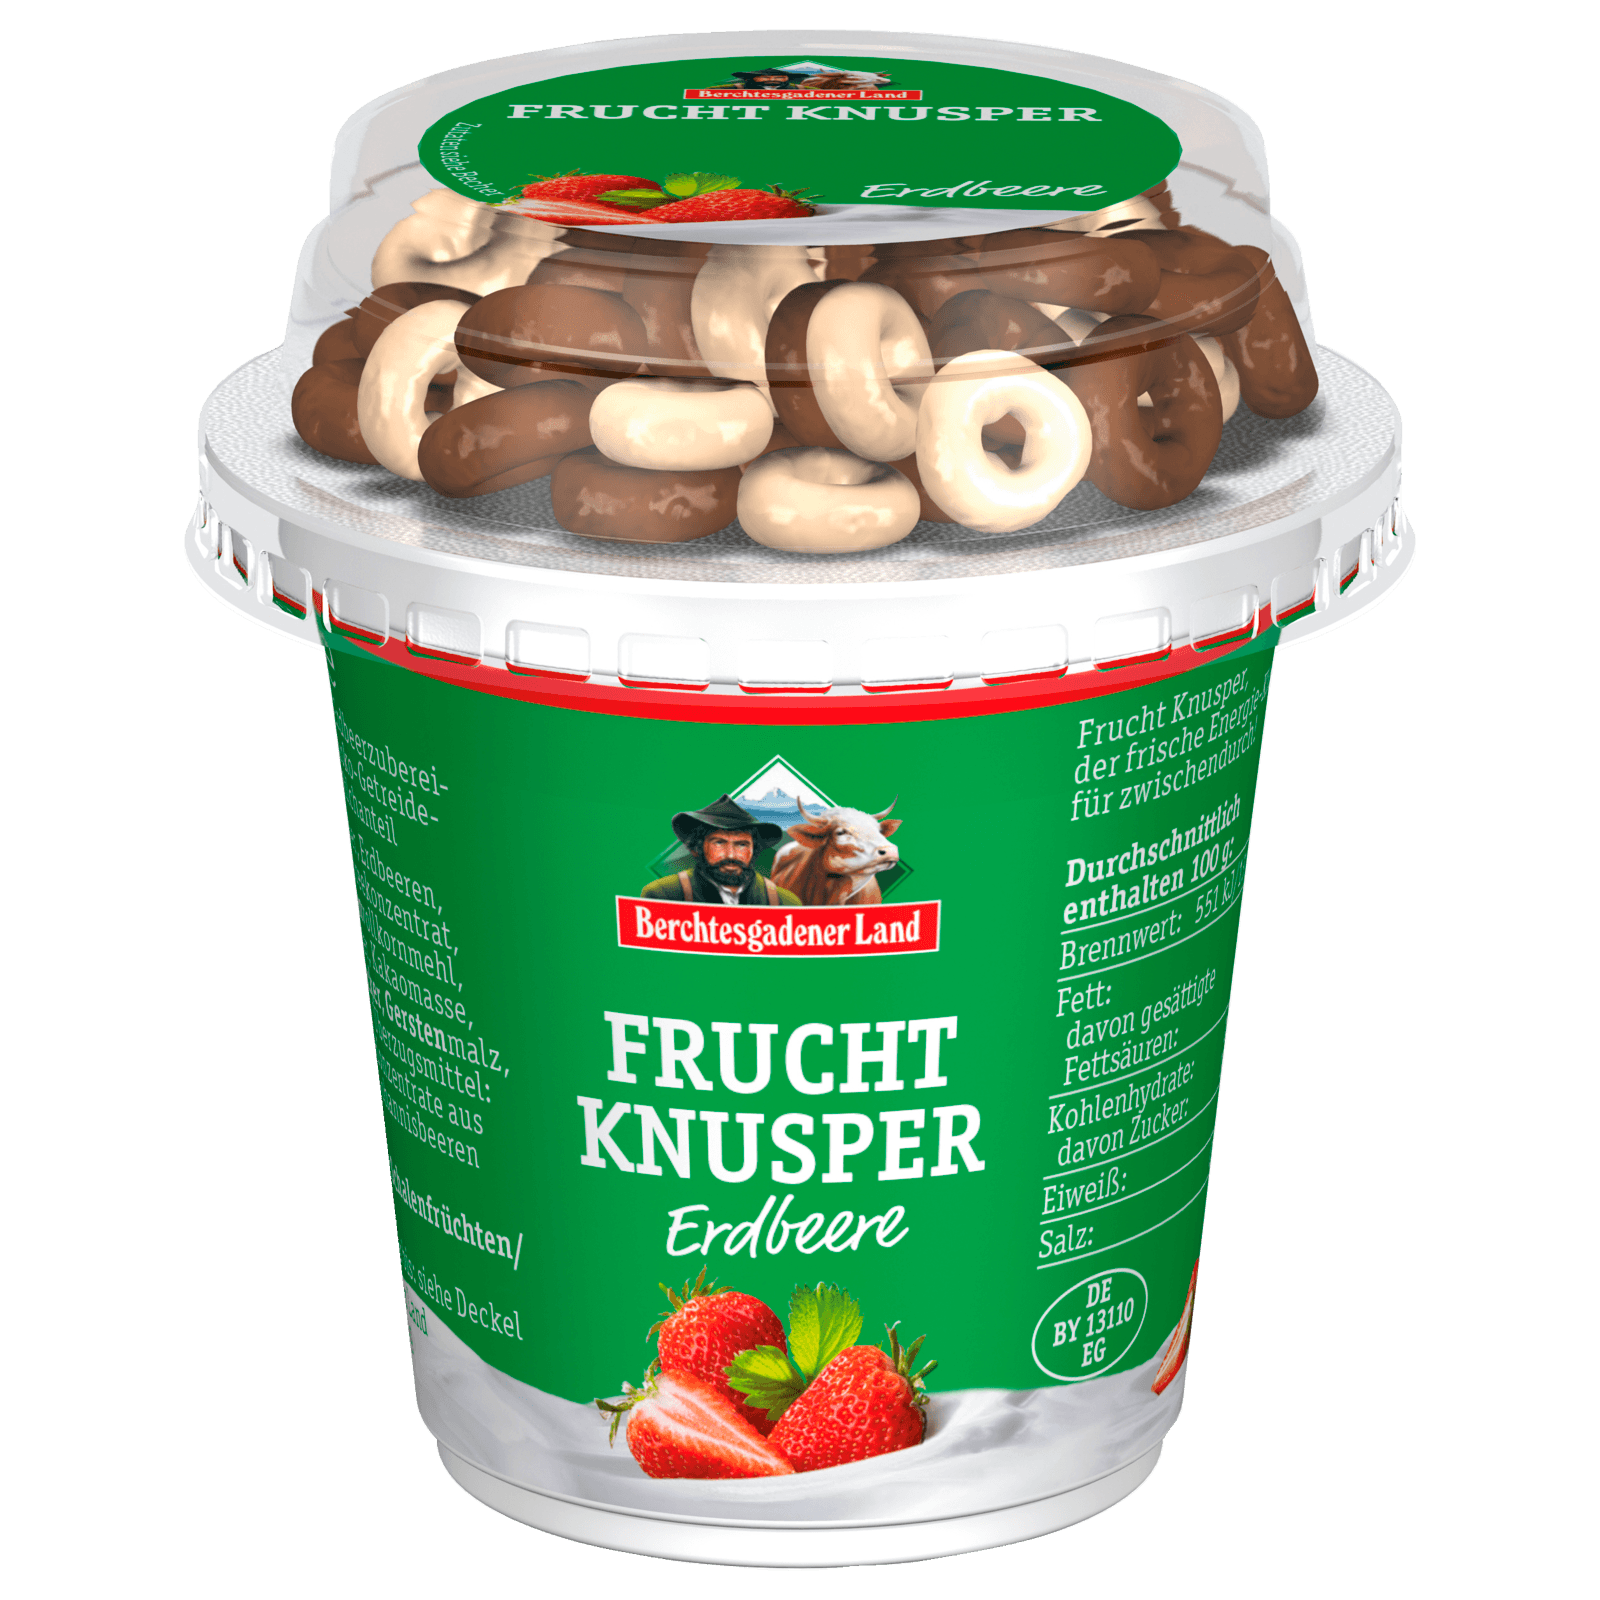 Berchtesgadener Land Frucht &amp; Knusper Erdbeer 150g bei REWE online ...